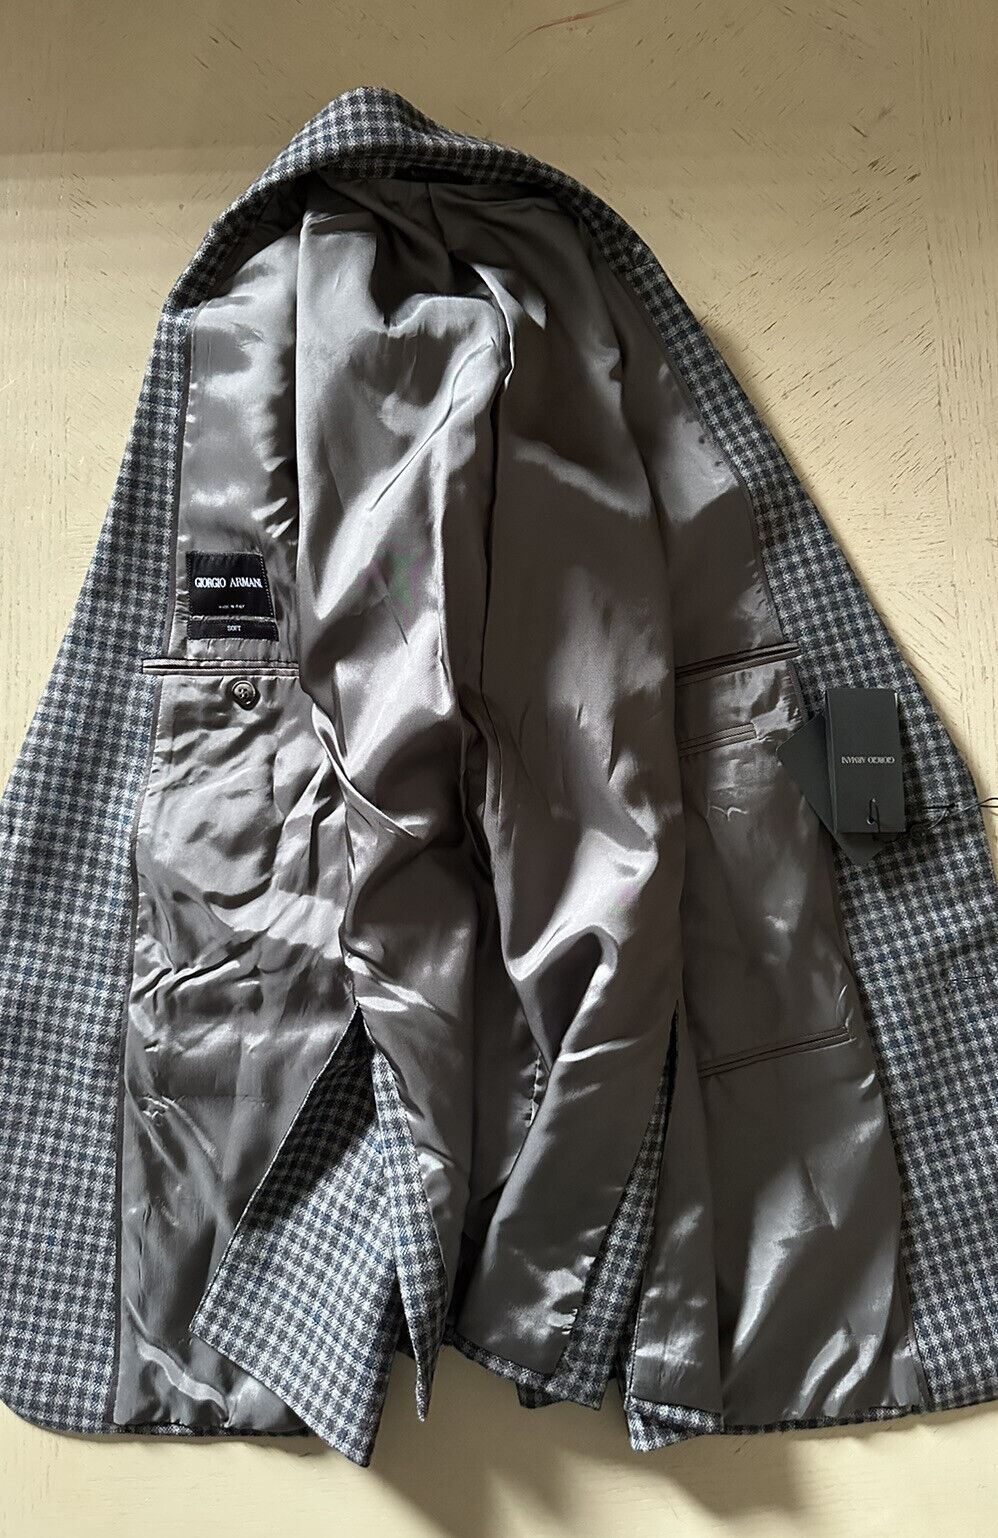 NWT $2395 Giorgio Armani Мужская спортивная куртка в клетку Блейзер Br/Gr/Grin 38 US/48E